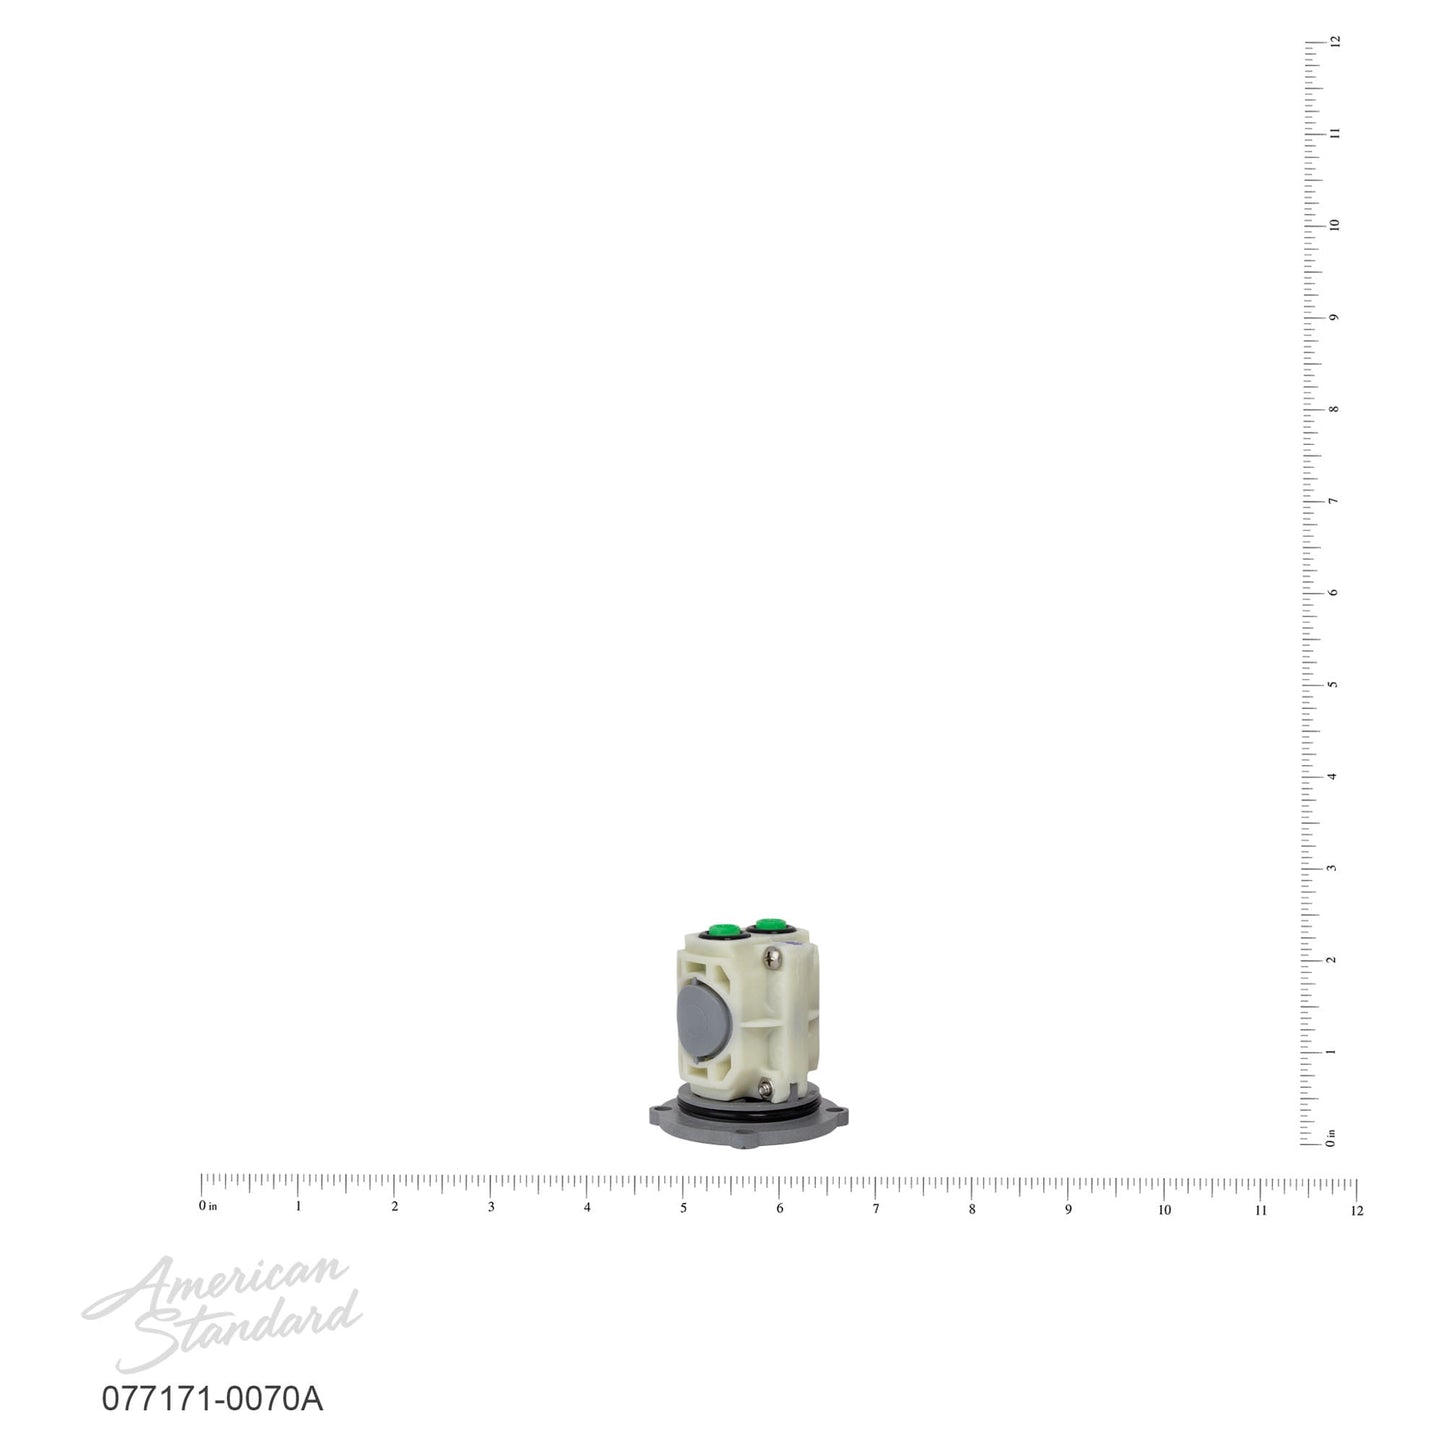 077171-0070A - Reliant + Bath/Shower Pressure Balance Cartridge